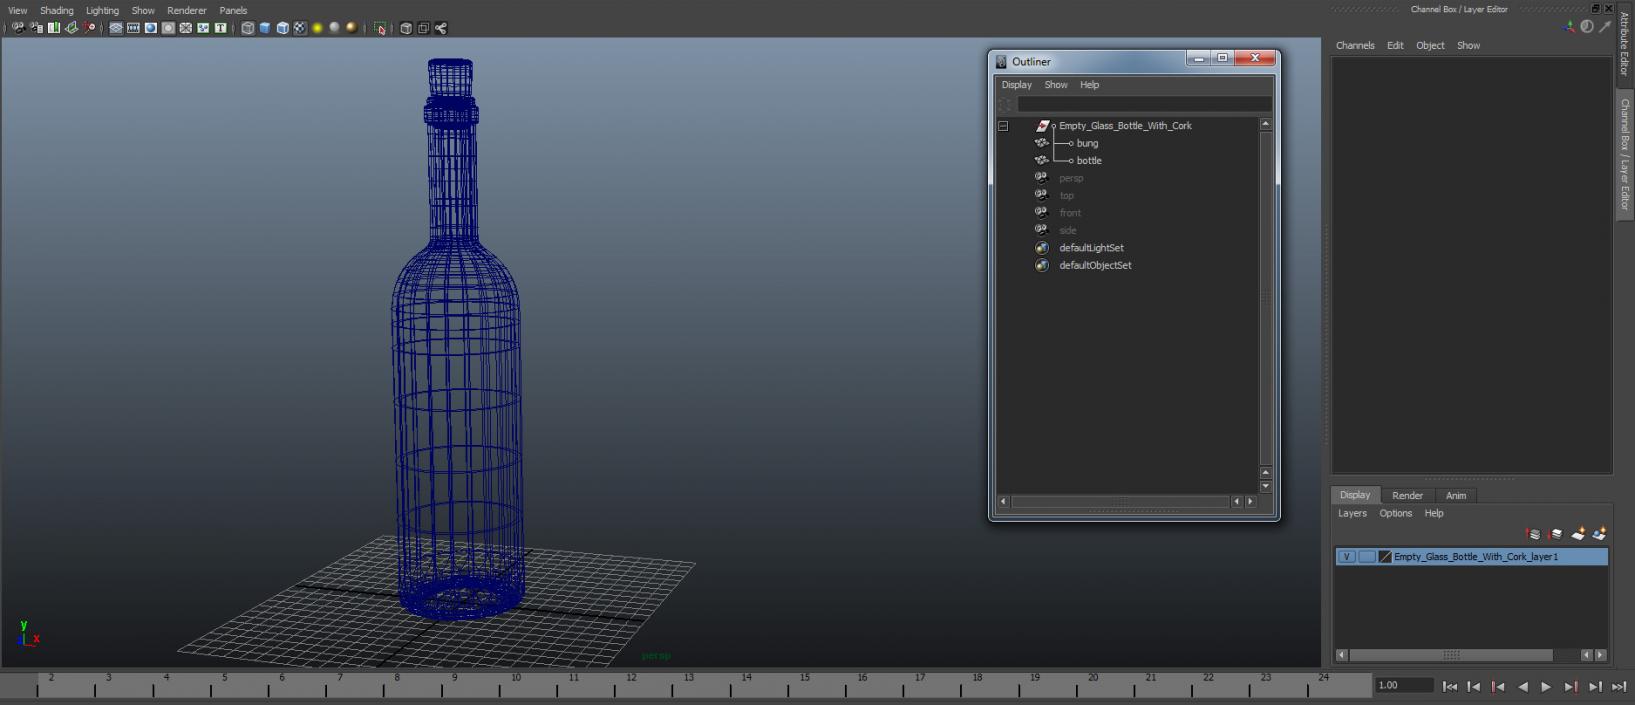 3D Empty Glass Bottle With Cork model